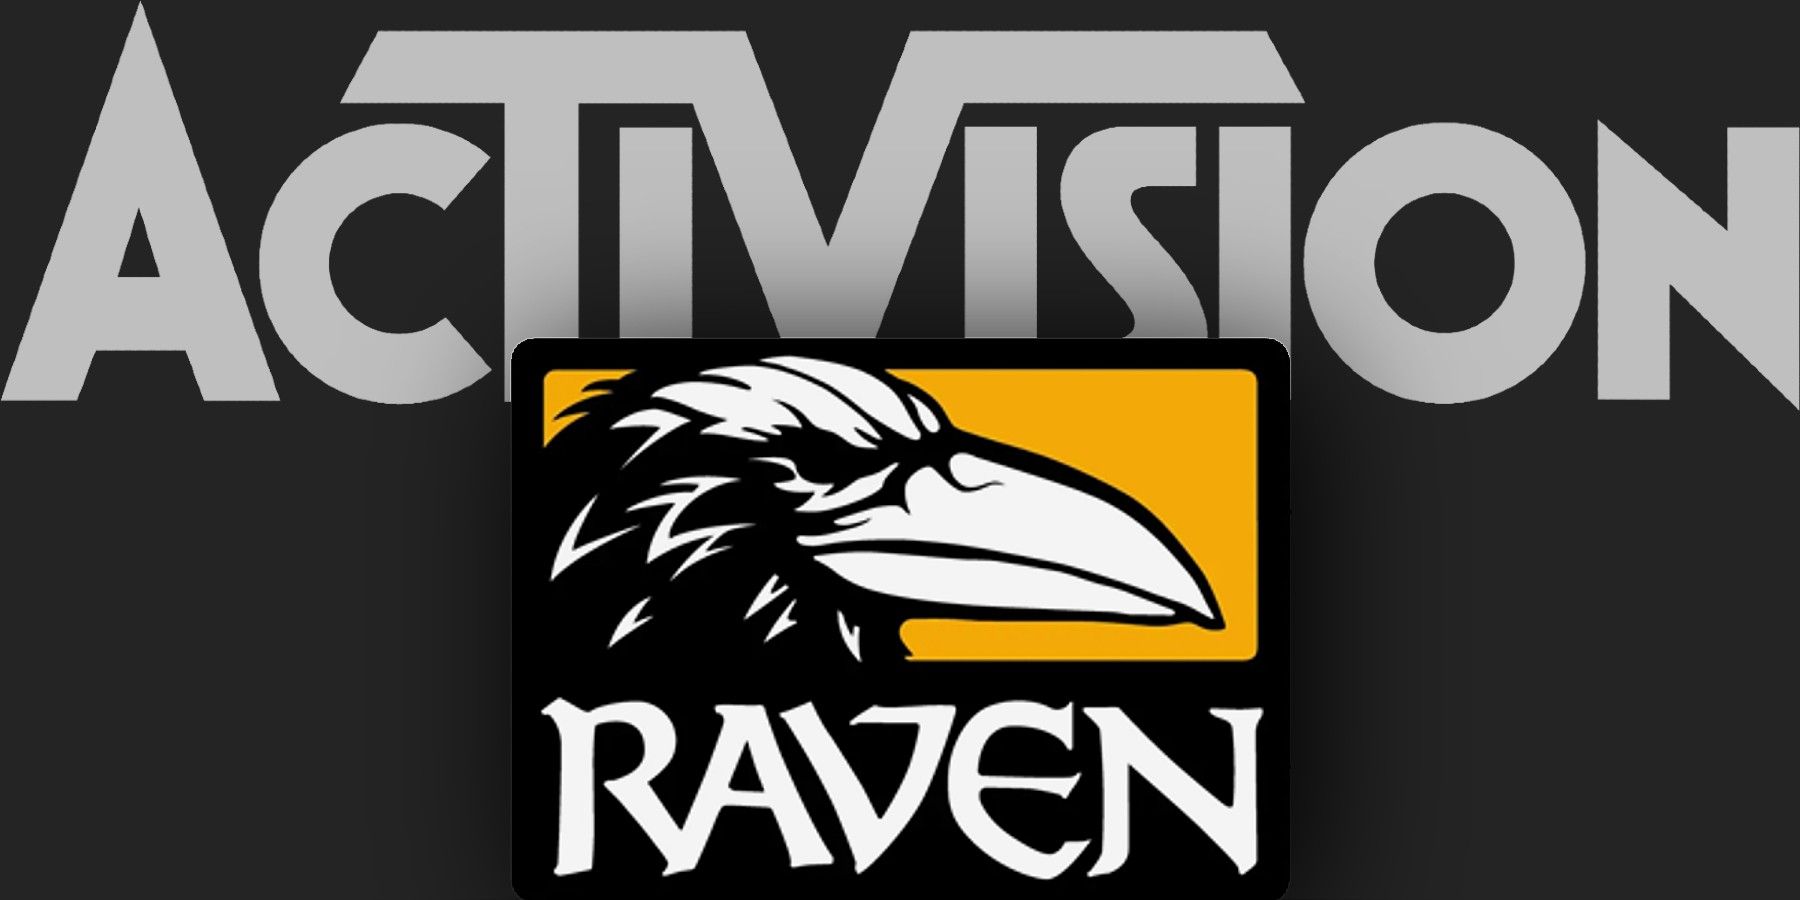 activision raven software logo gray background